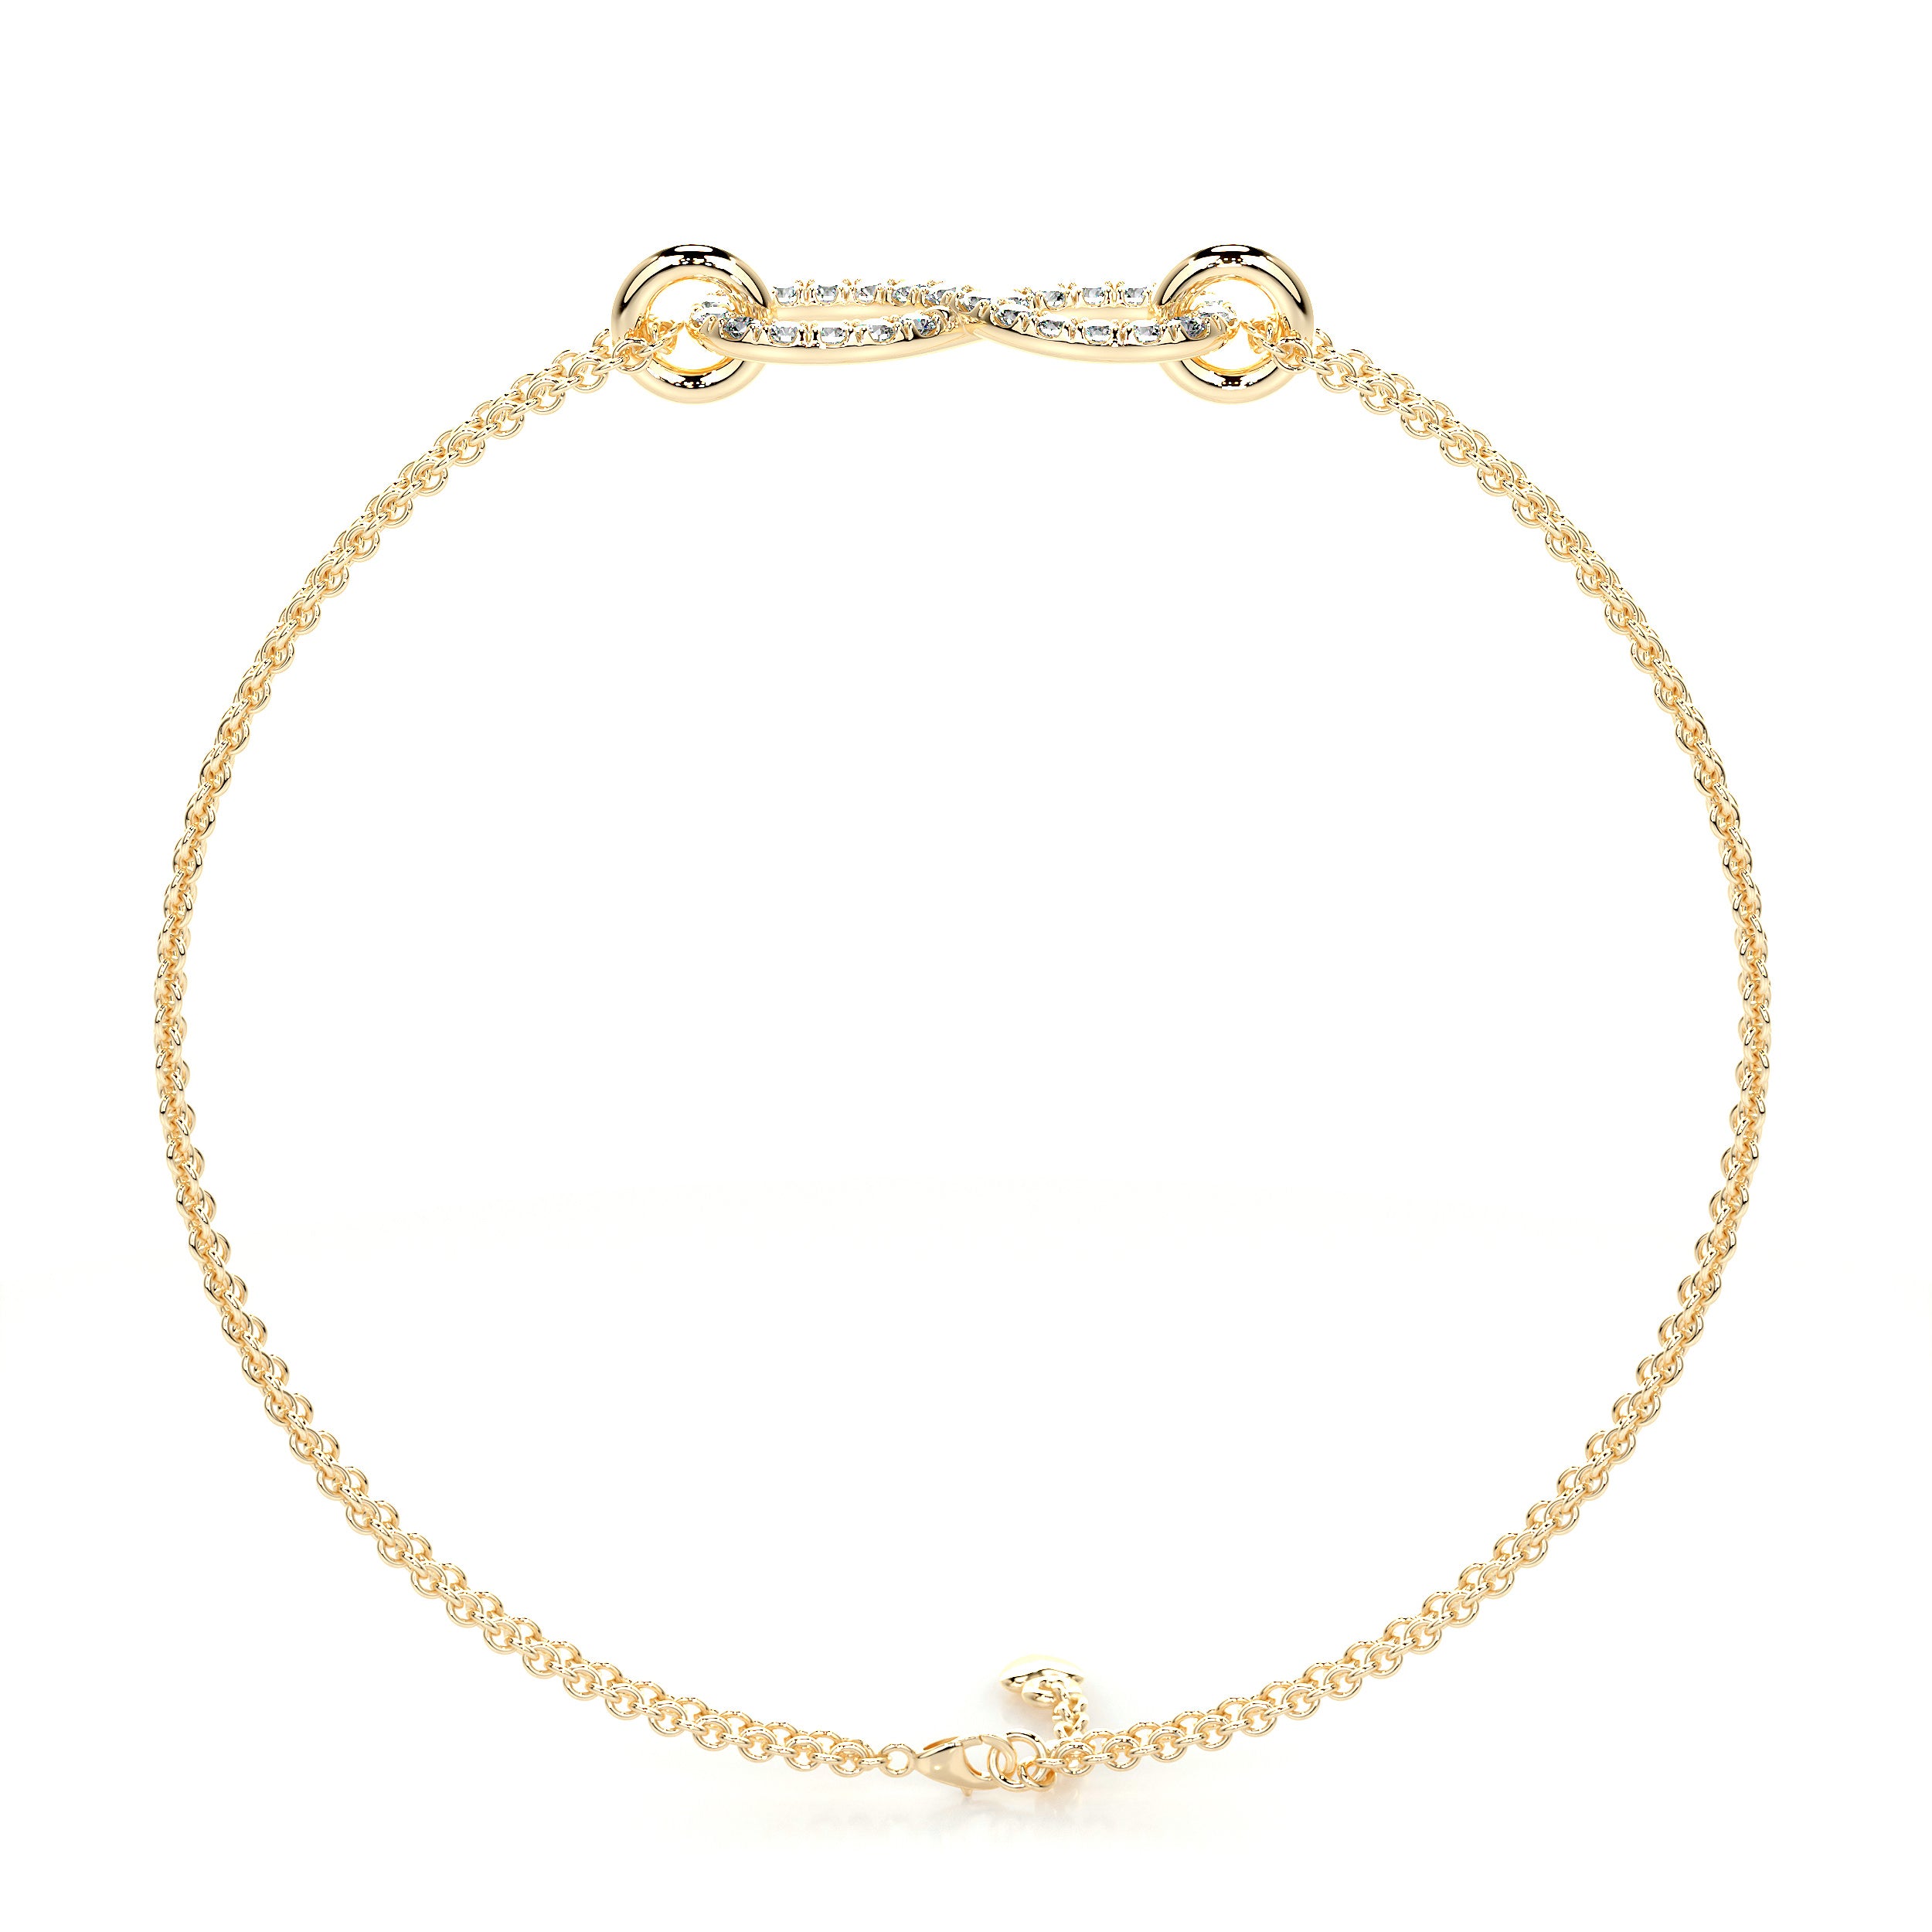 Debbie Diamonds Bracelet   (0.25 Carat) -18K Yellow Gold